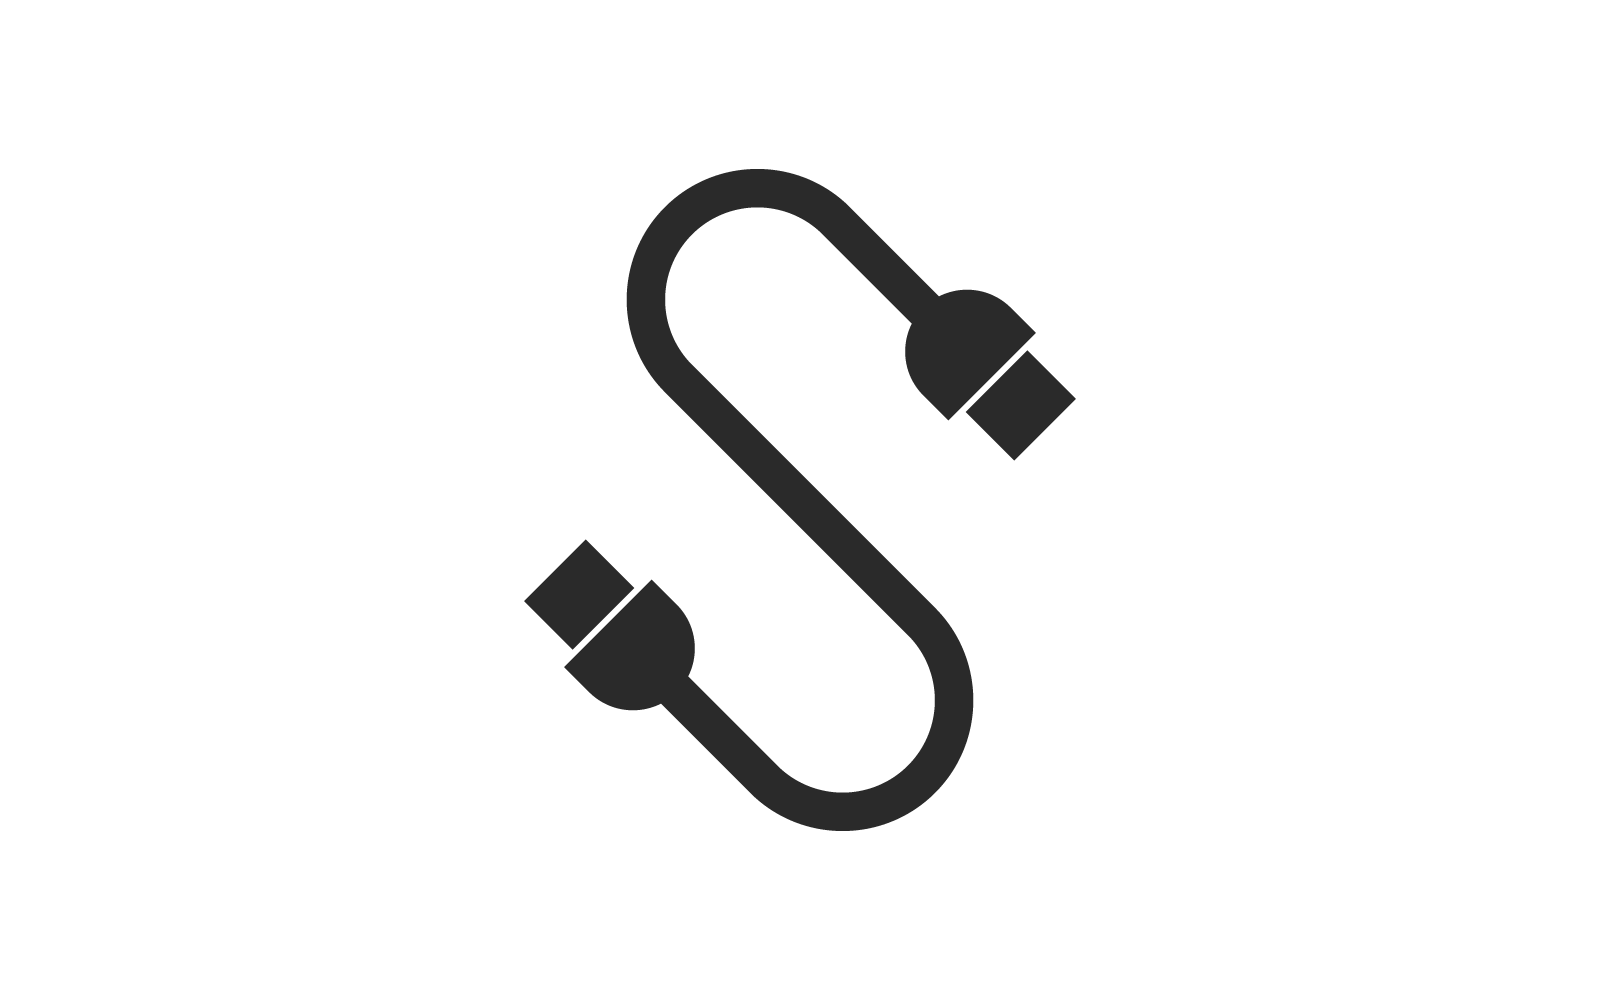 USB adatátvitel, kábel ikon logó vektor sablon design